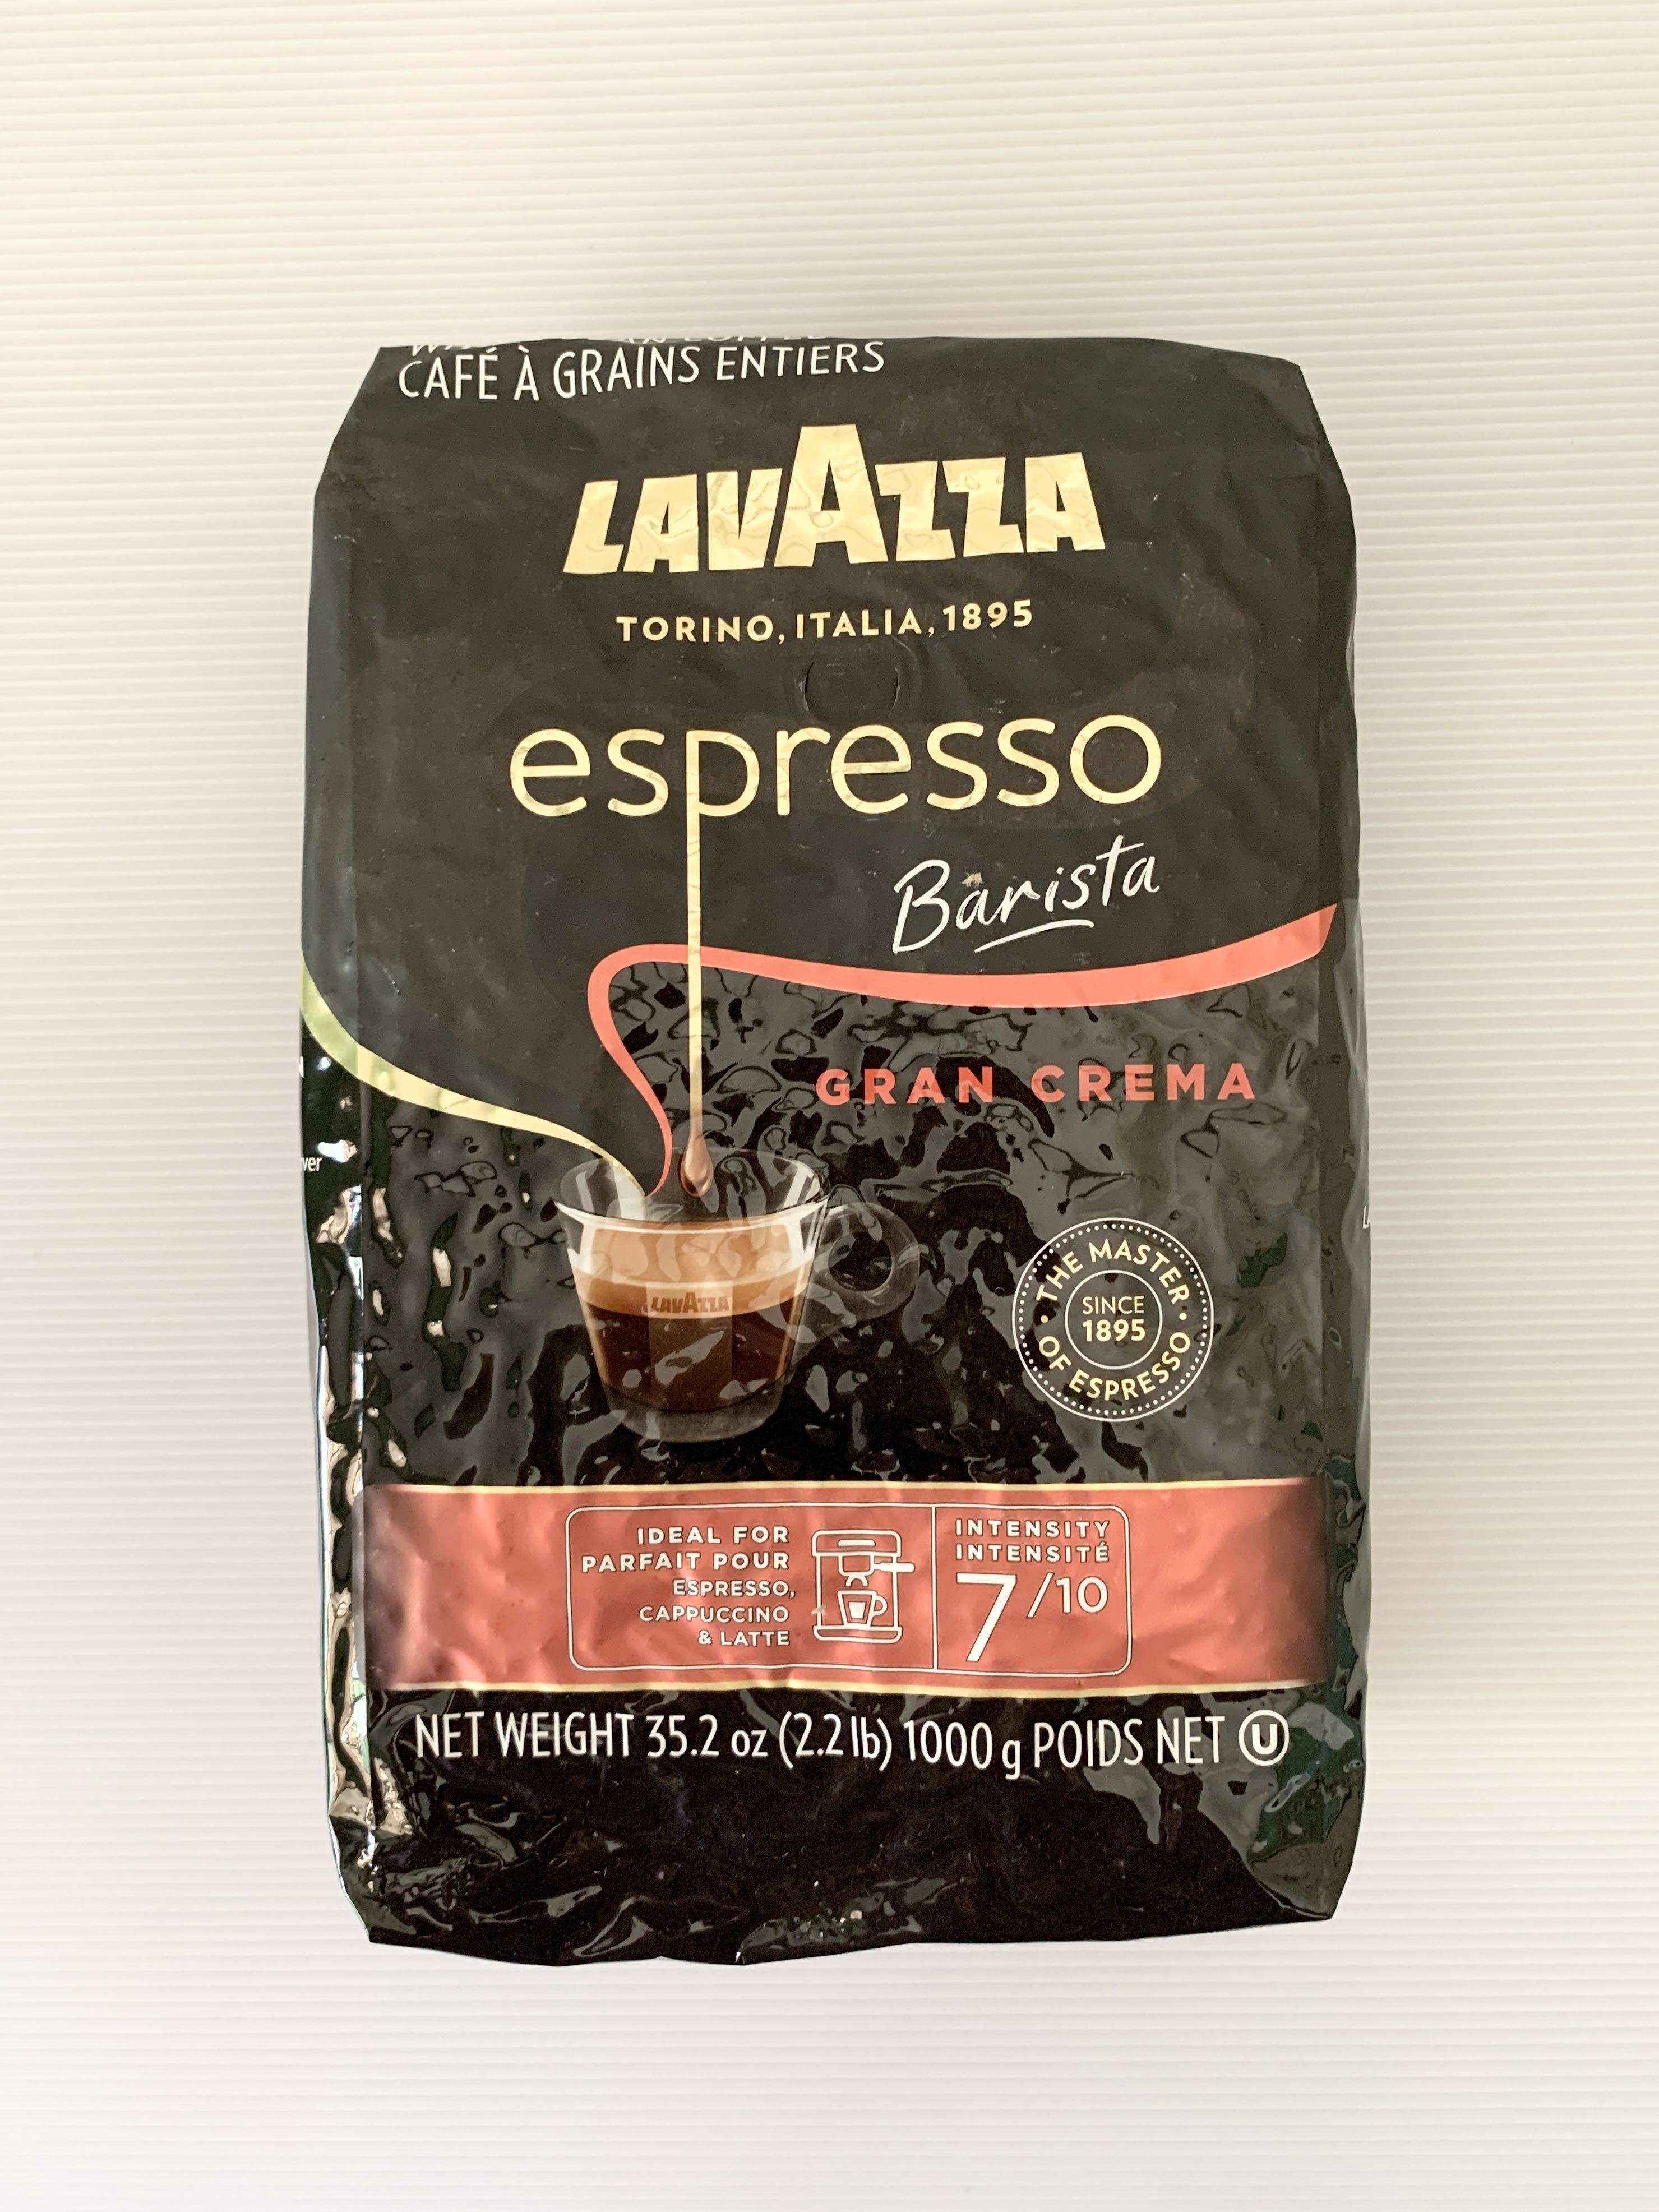 Lavazza Gran Crema Whole Bean Coffee Medium Roast 2.2 LB, 2.2 LB – Italy  Best Coffee